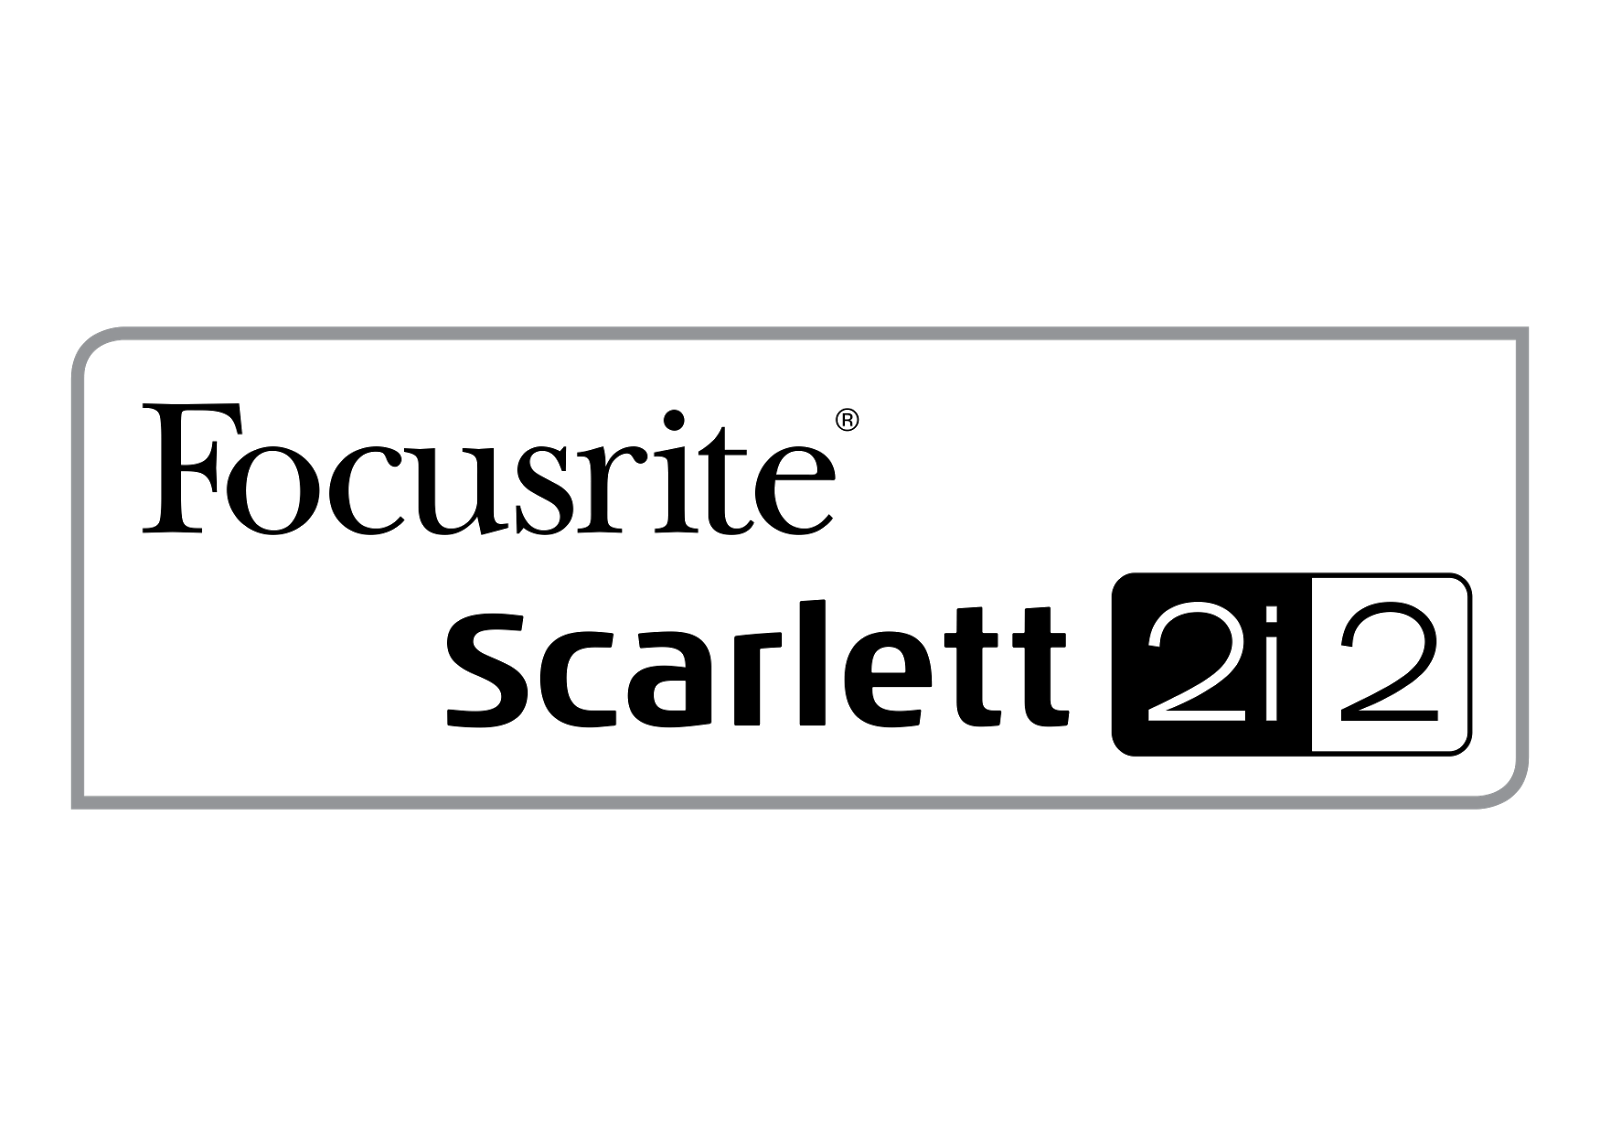 Focusrite Logo - Focusrite Scarlett 2i2 Logo Vector~ Format Cdr, Ai, Eps, Svg, PDF, PNG